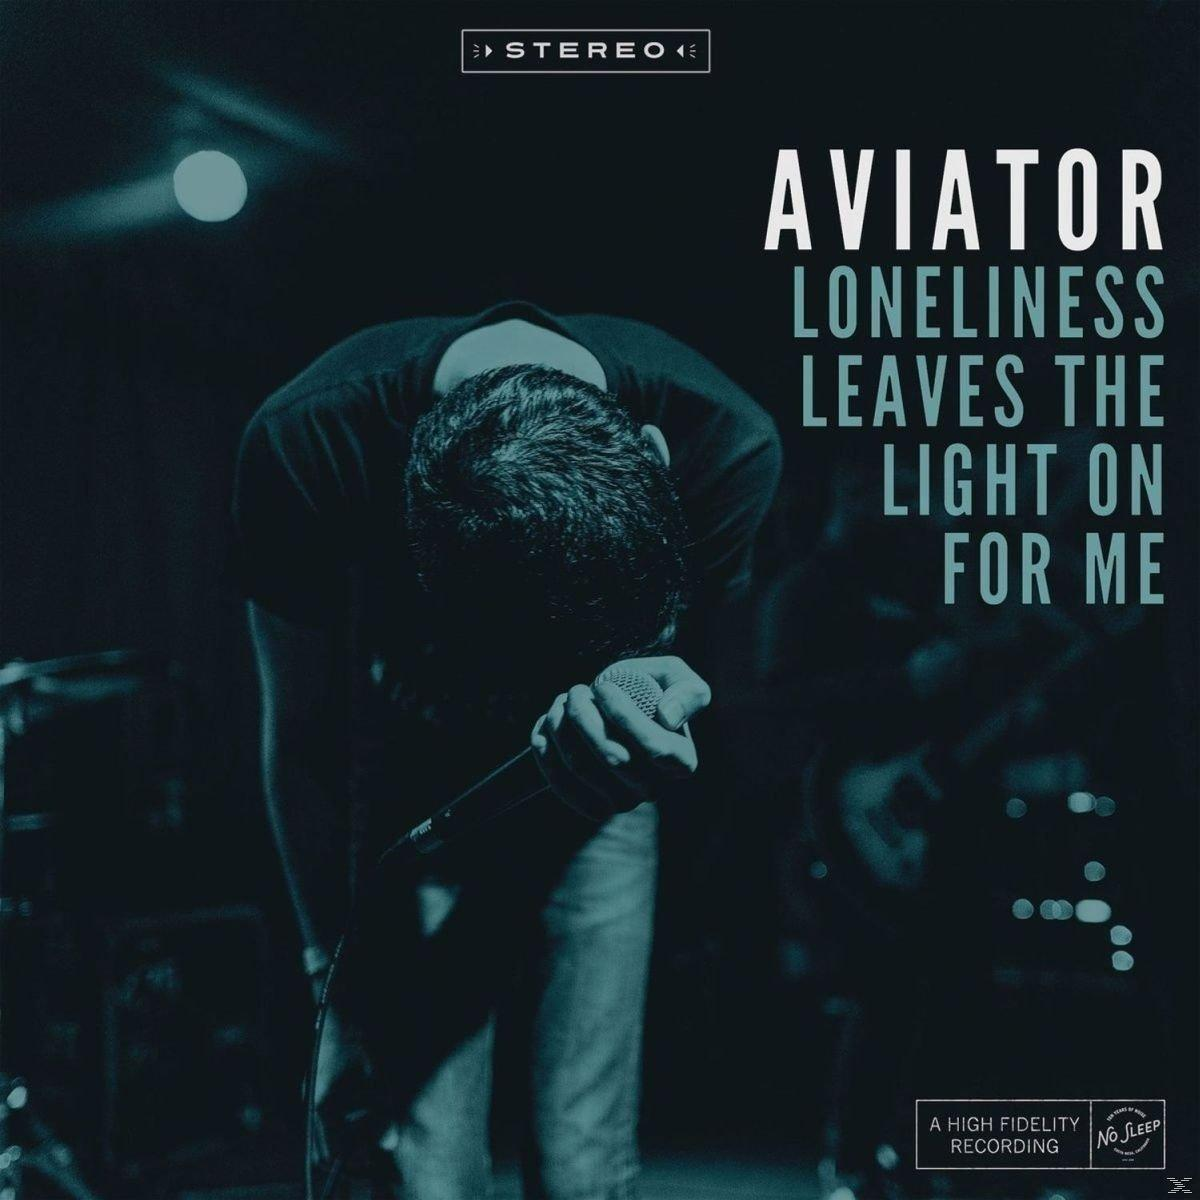 The On (Vinyl) - Aviator - The Light Loneliness Leaves